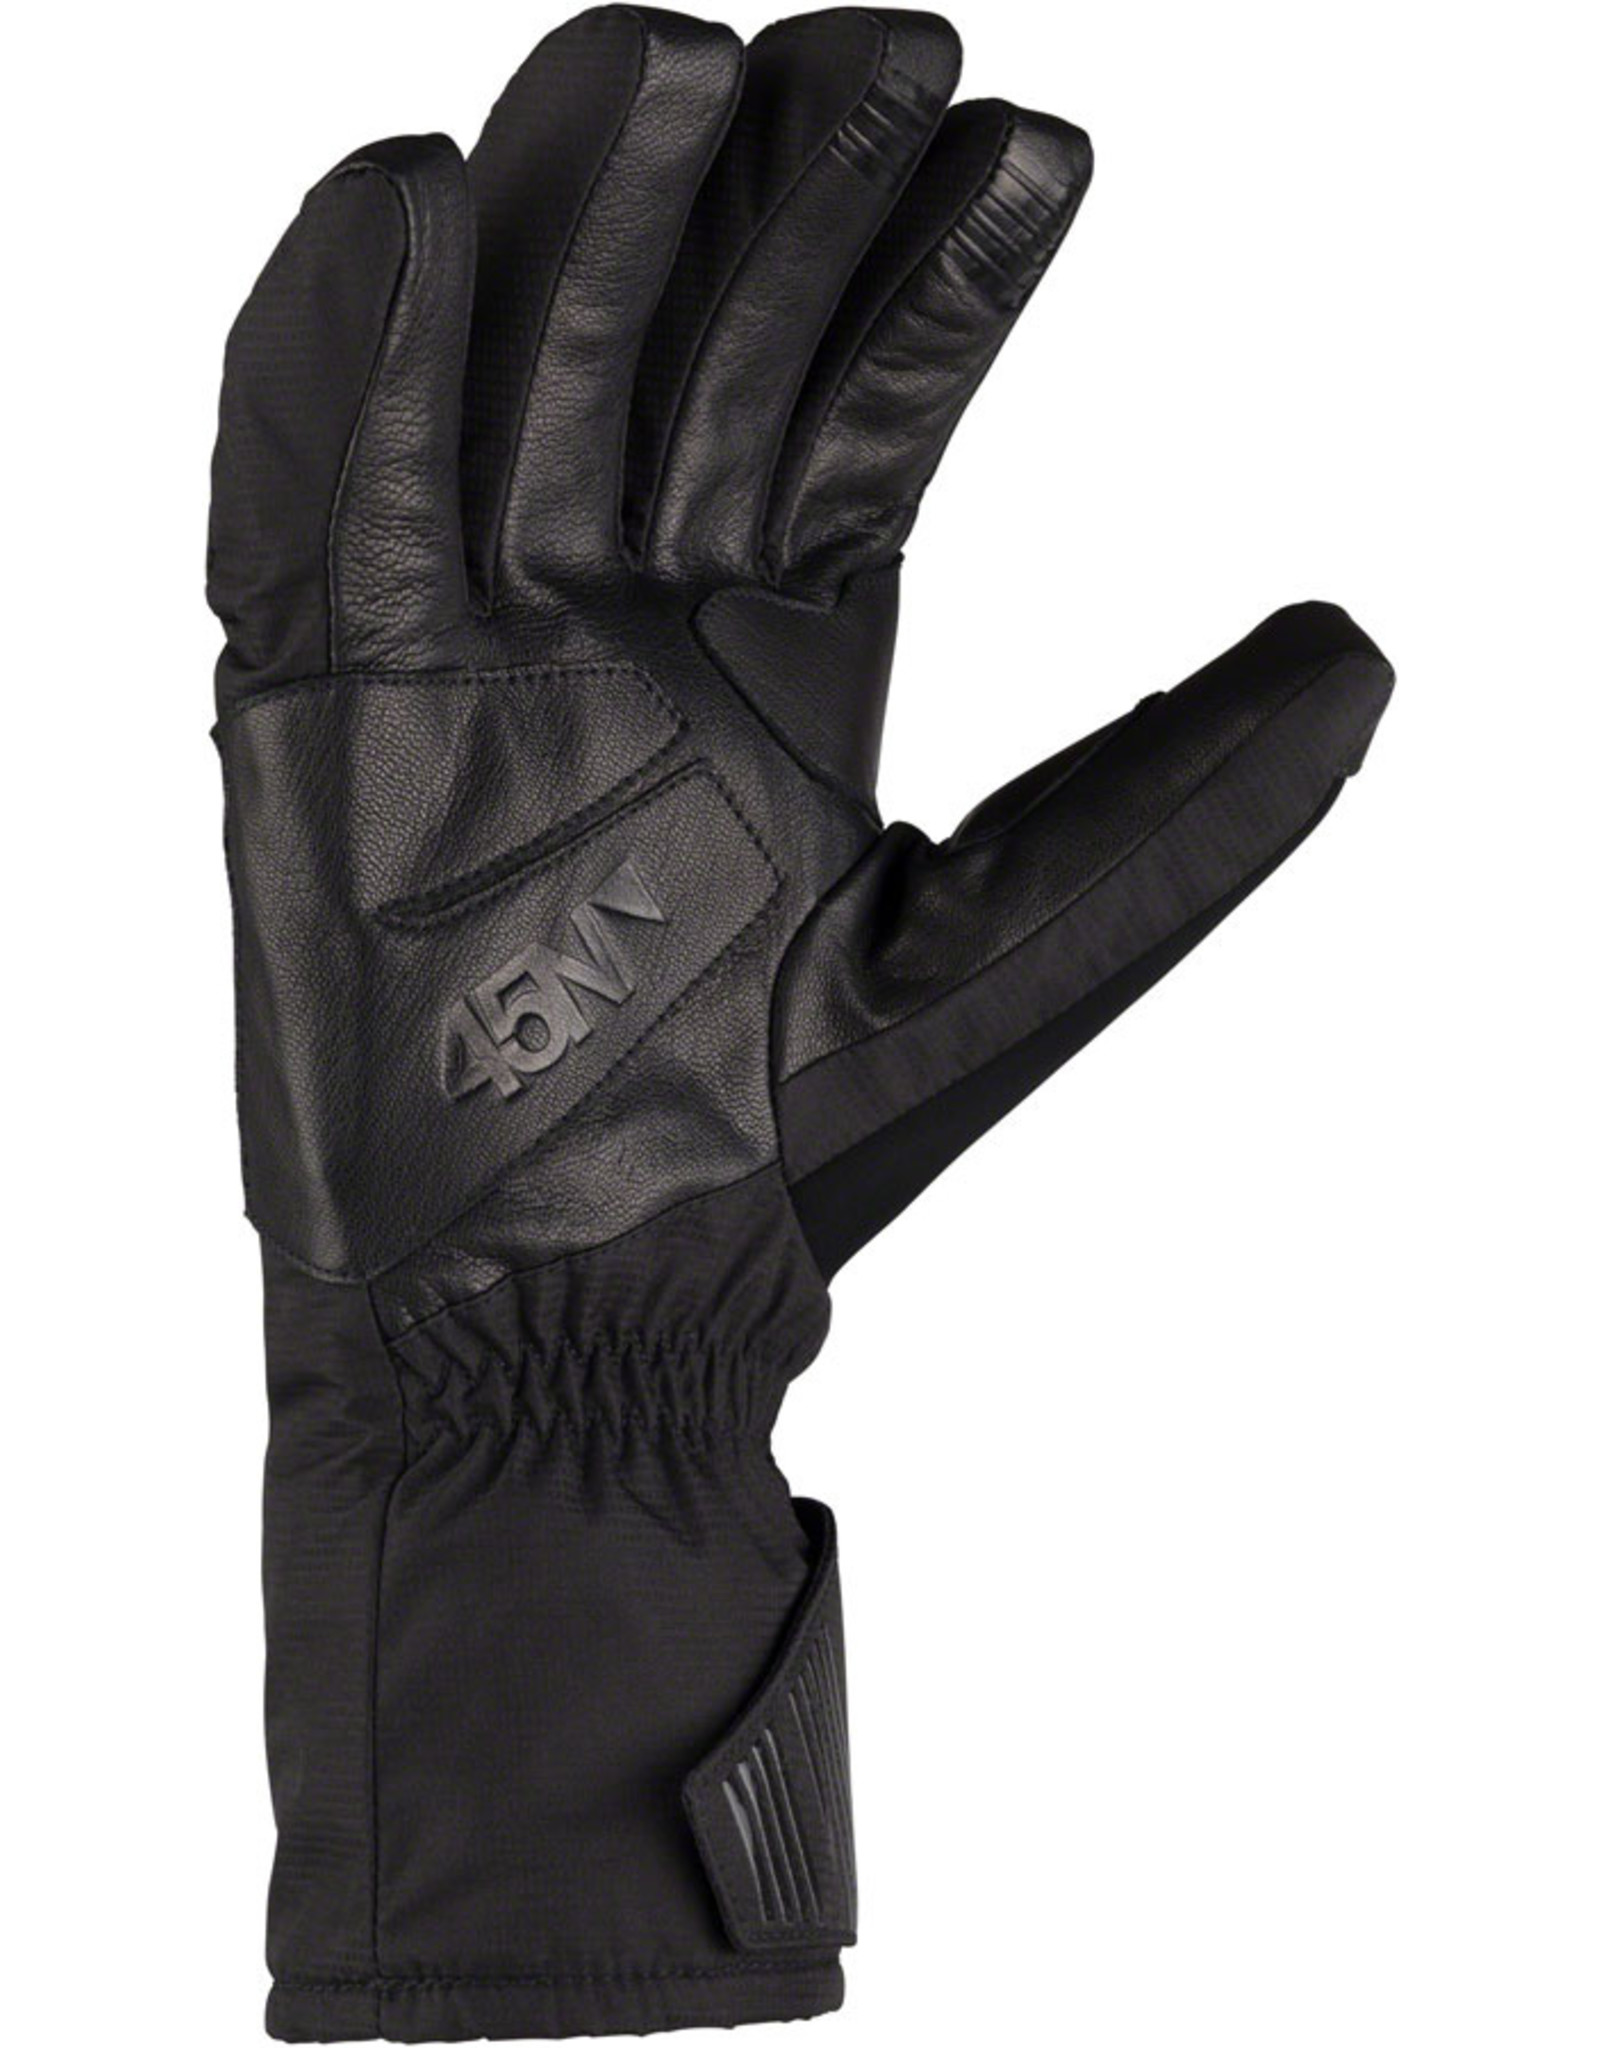 45NRTH 45NRTH Sturmfist 5 Finger Glove: Black LG (9)